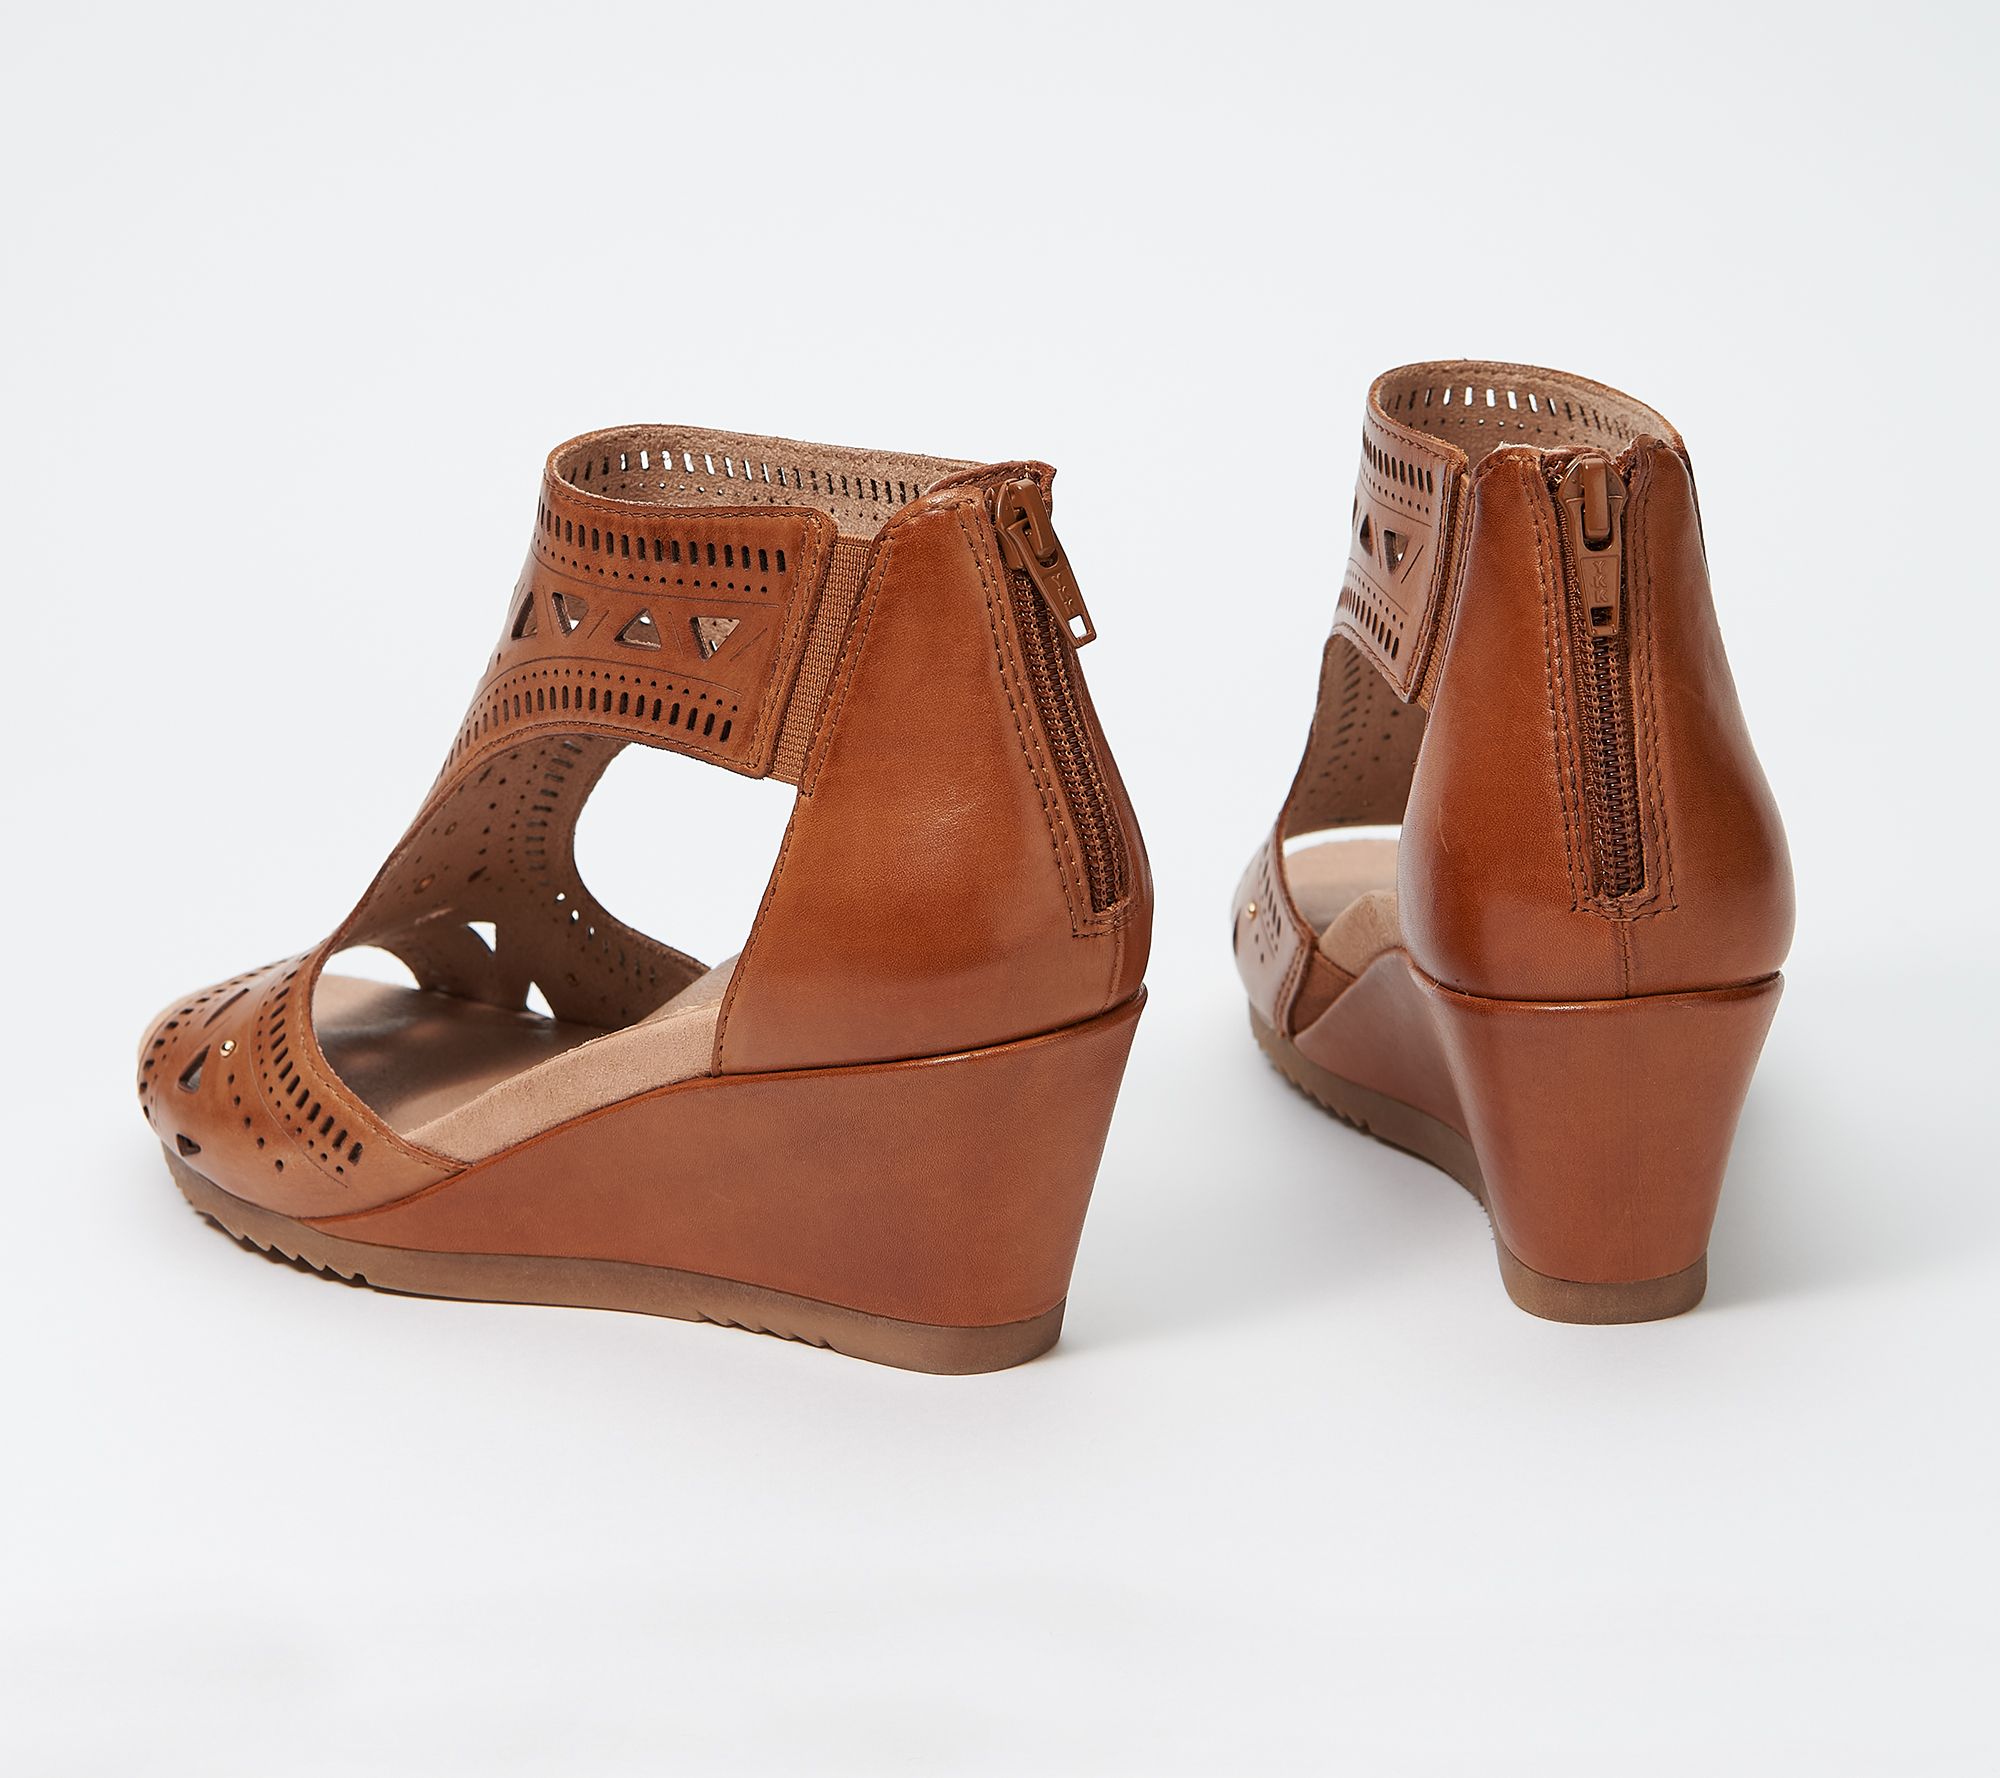 Earth Leather Wedge Sandals - Attalea Barbudo - QVC.com